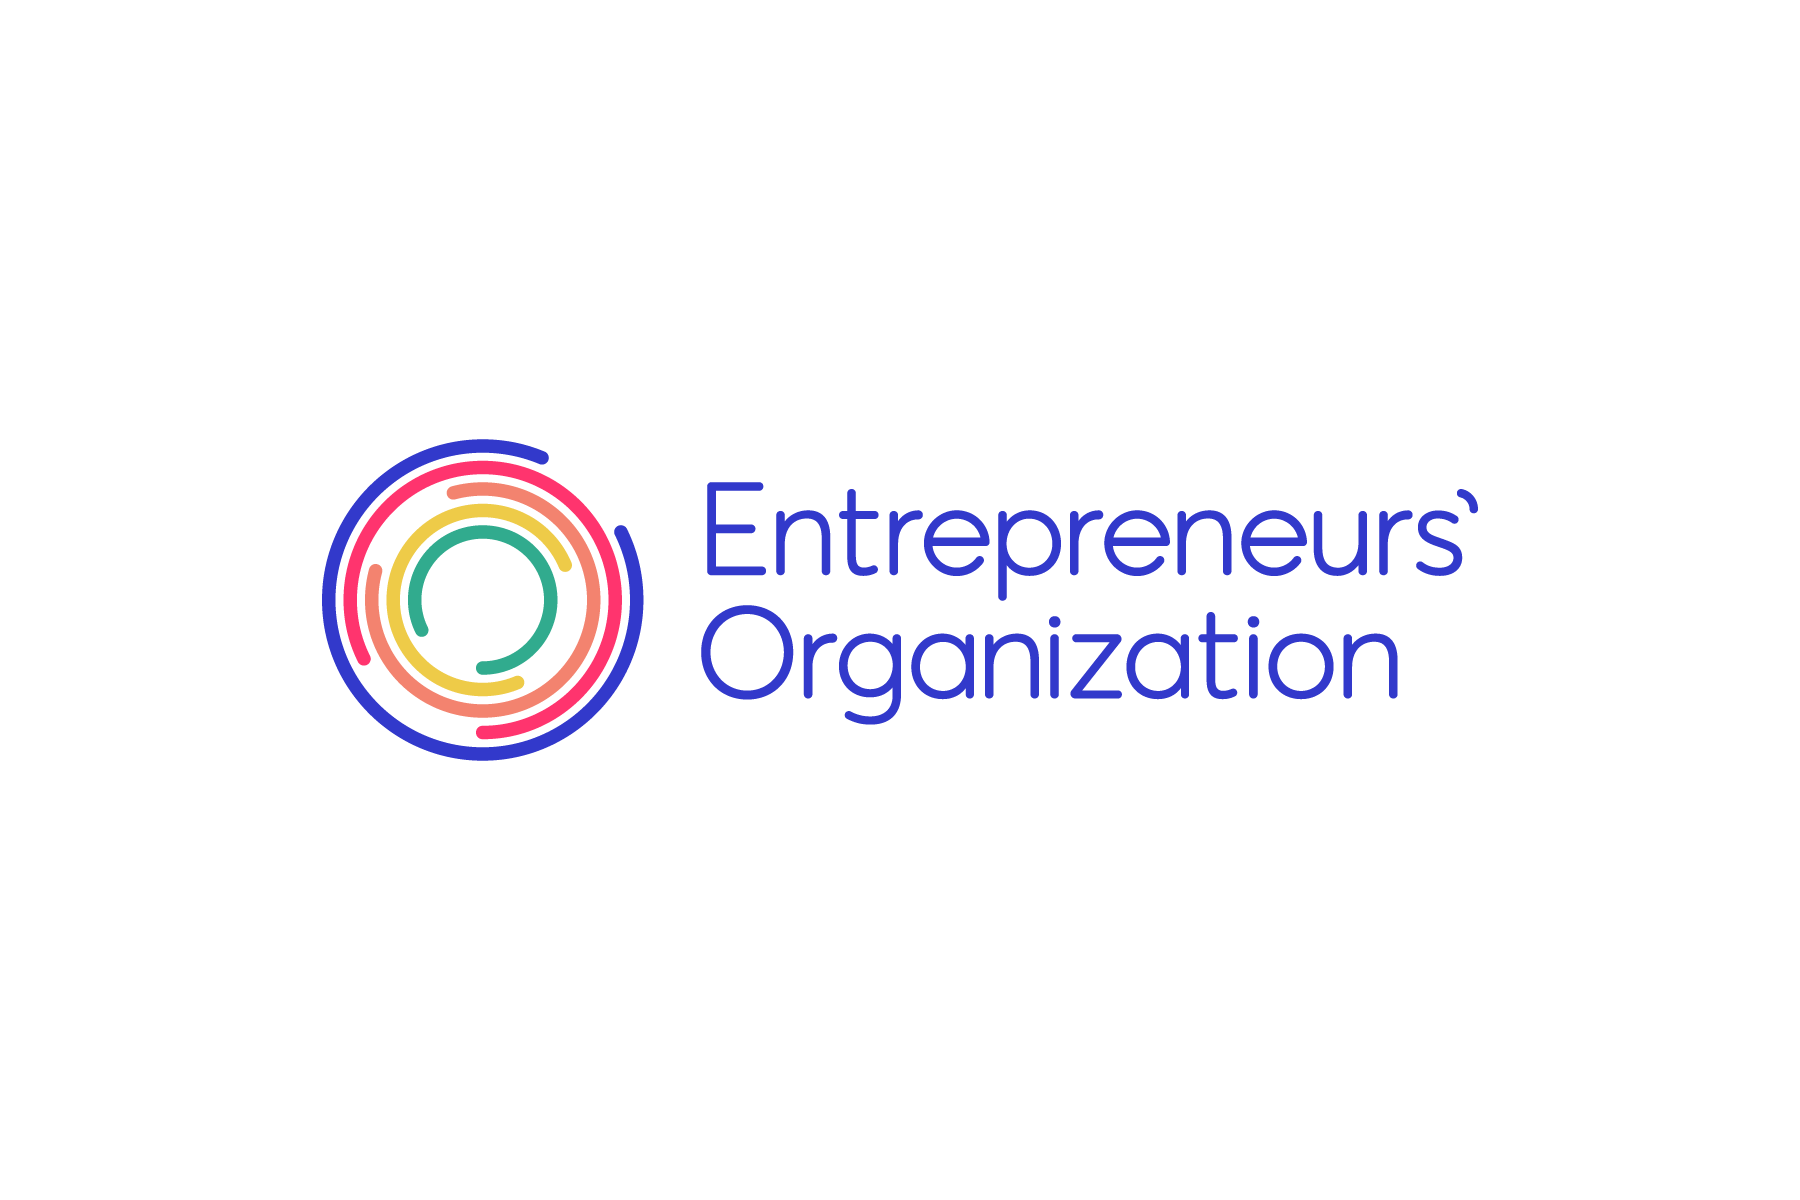 Enterpreneurs Organization